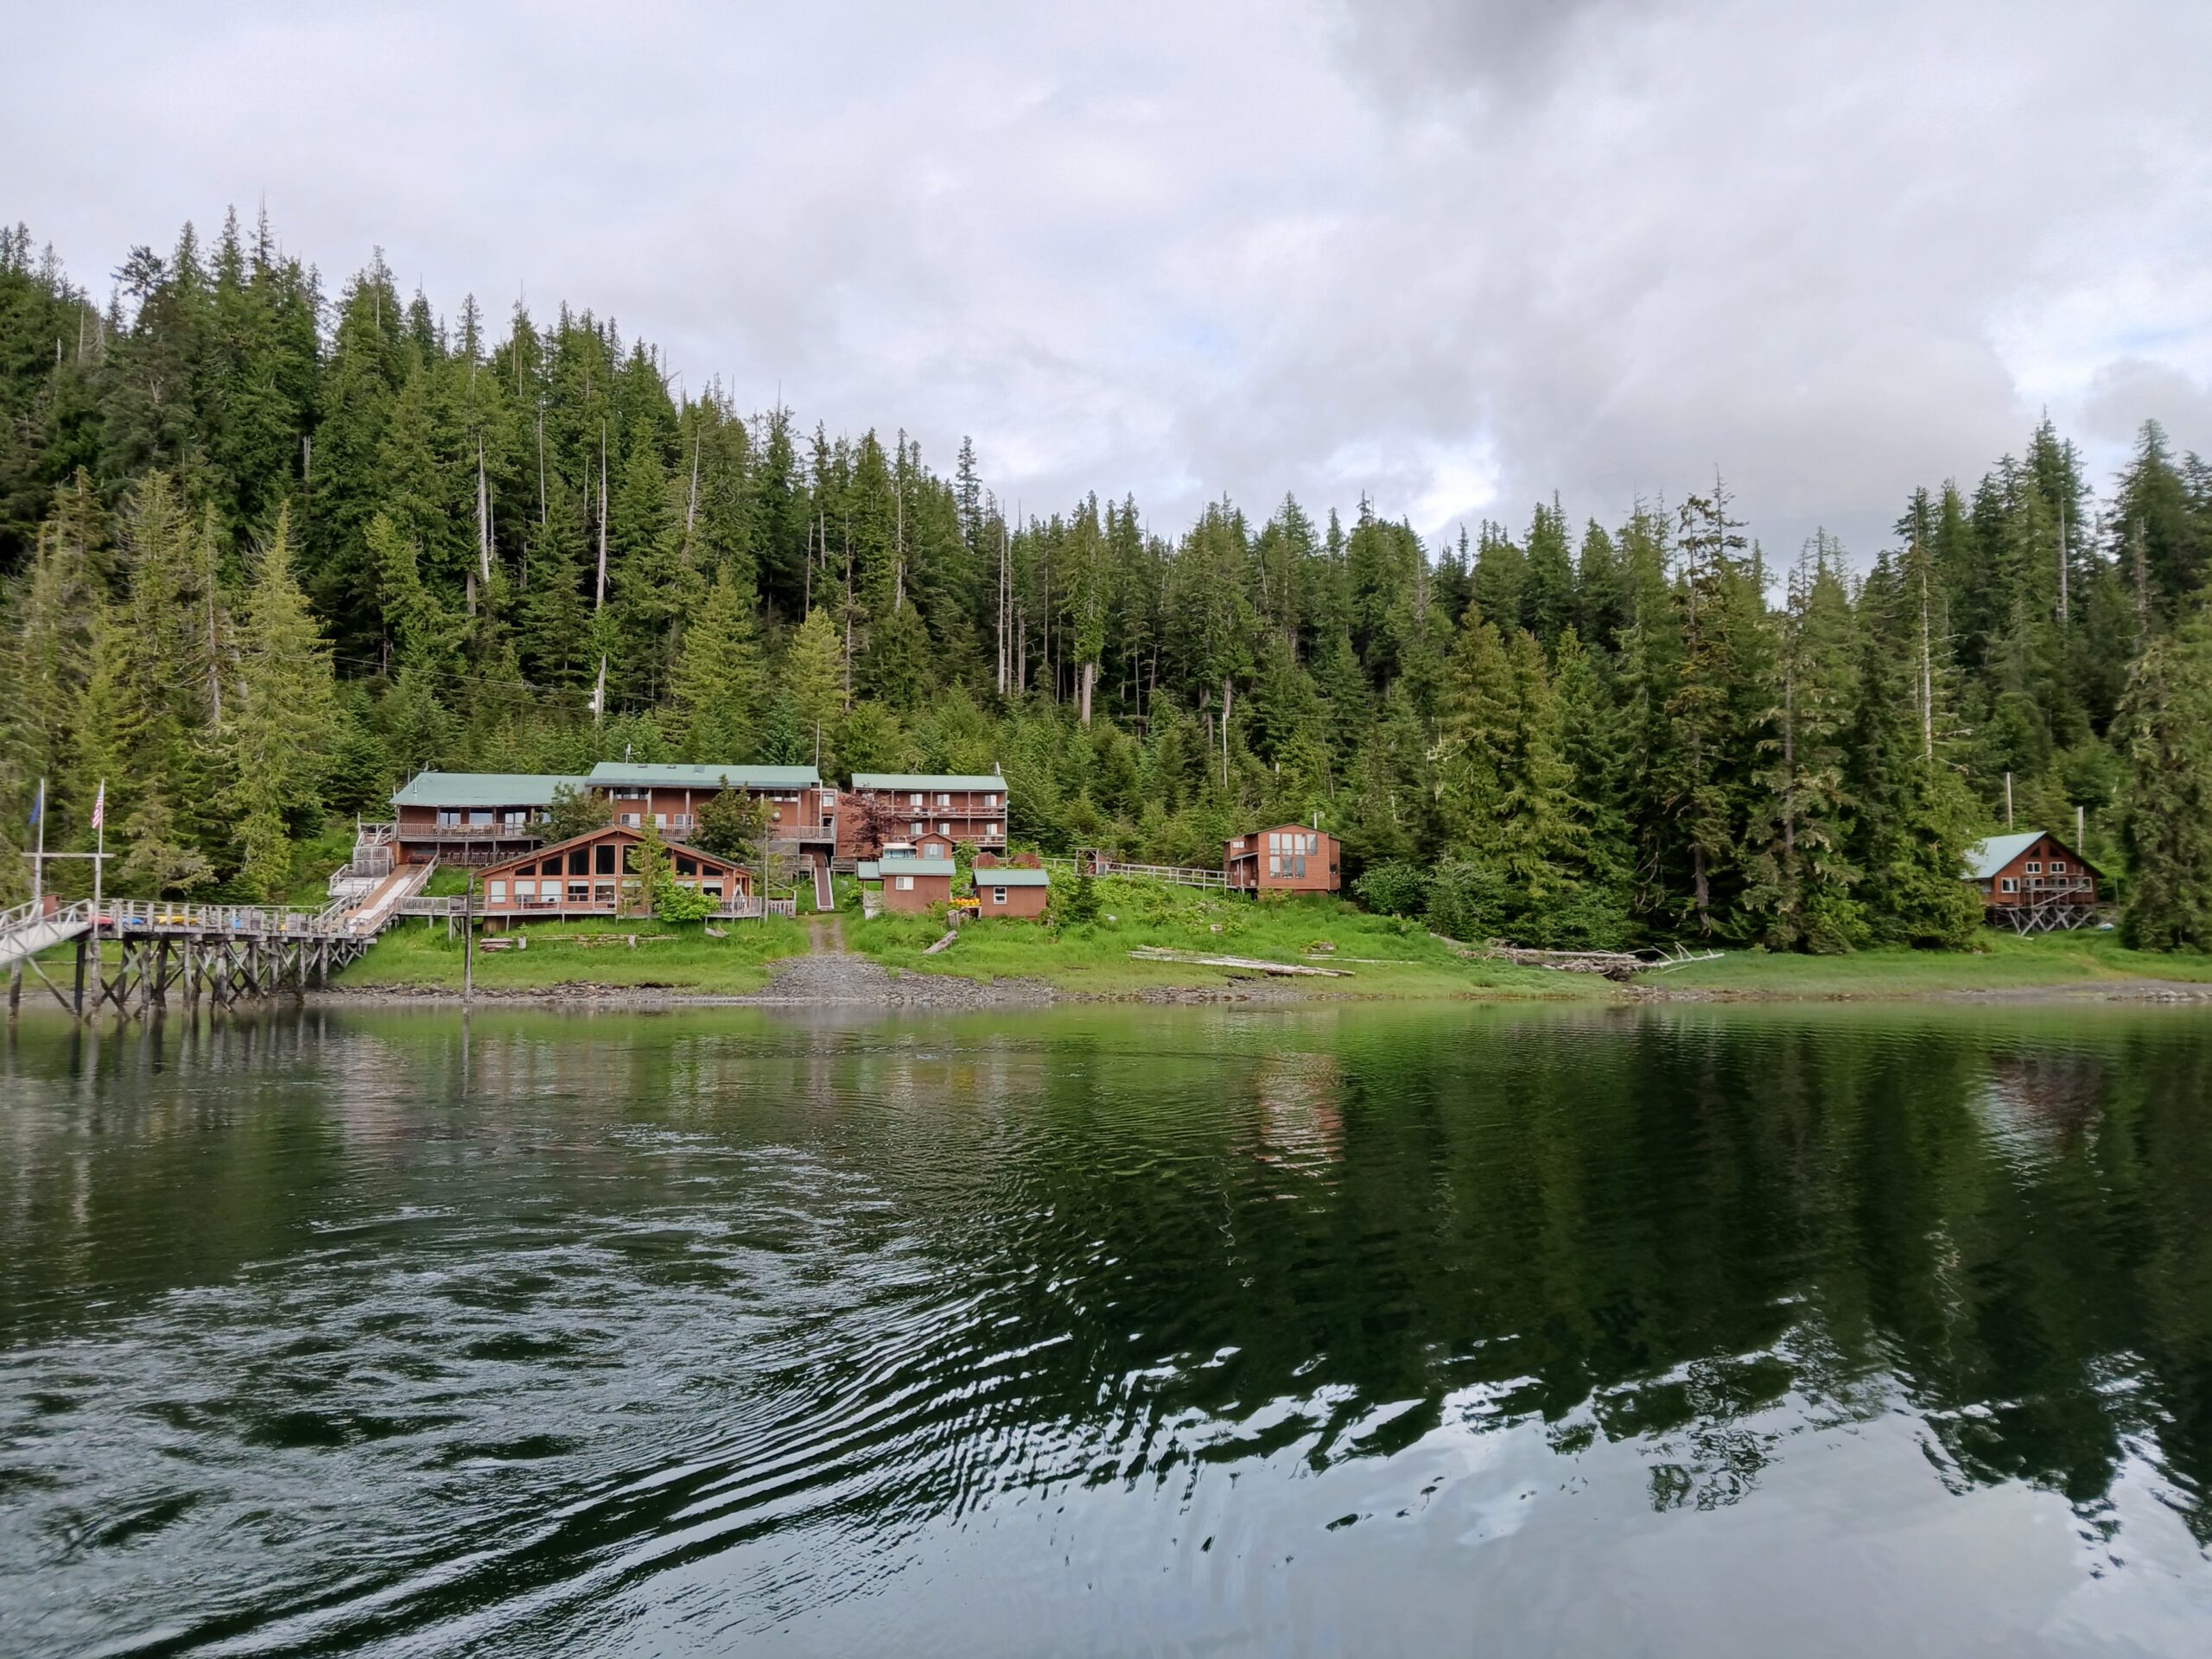 A fishing lodge in rural southeast Alaska shoreline.